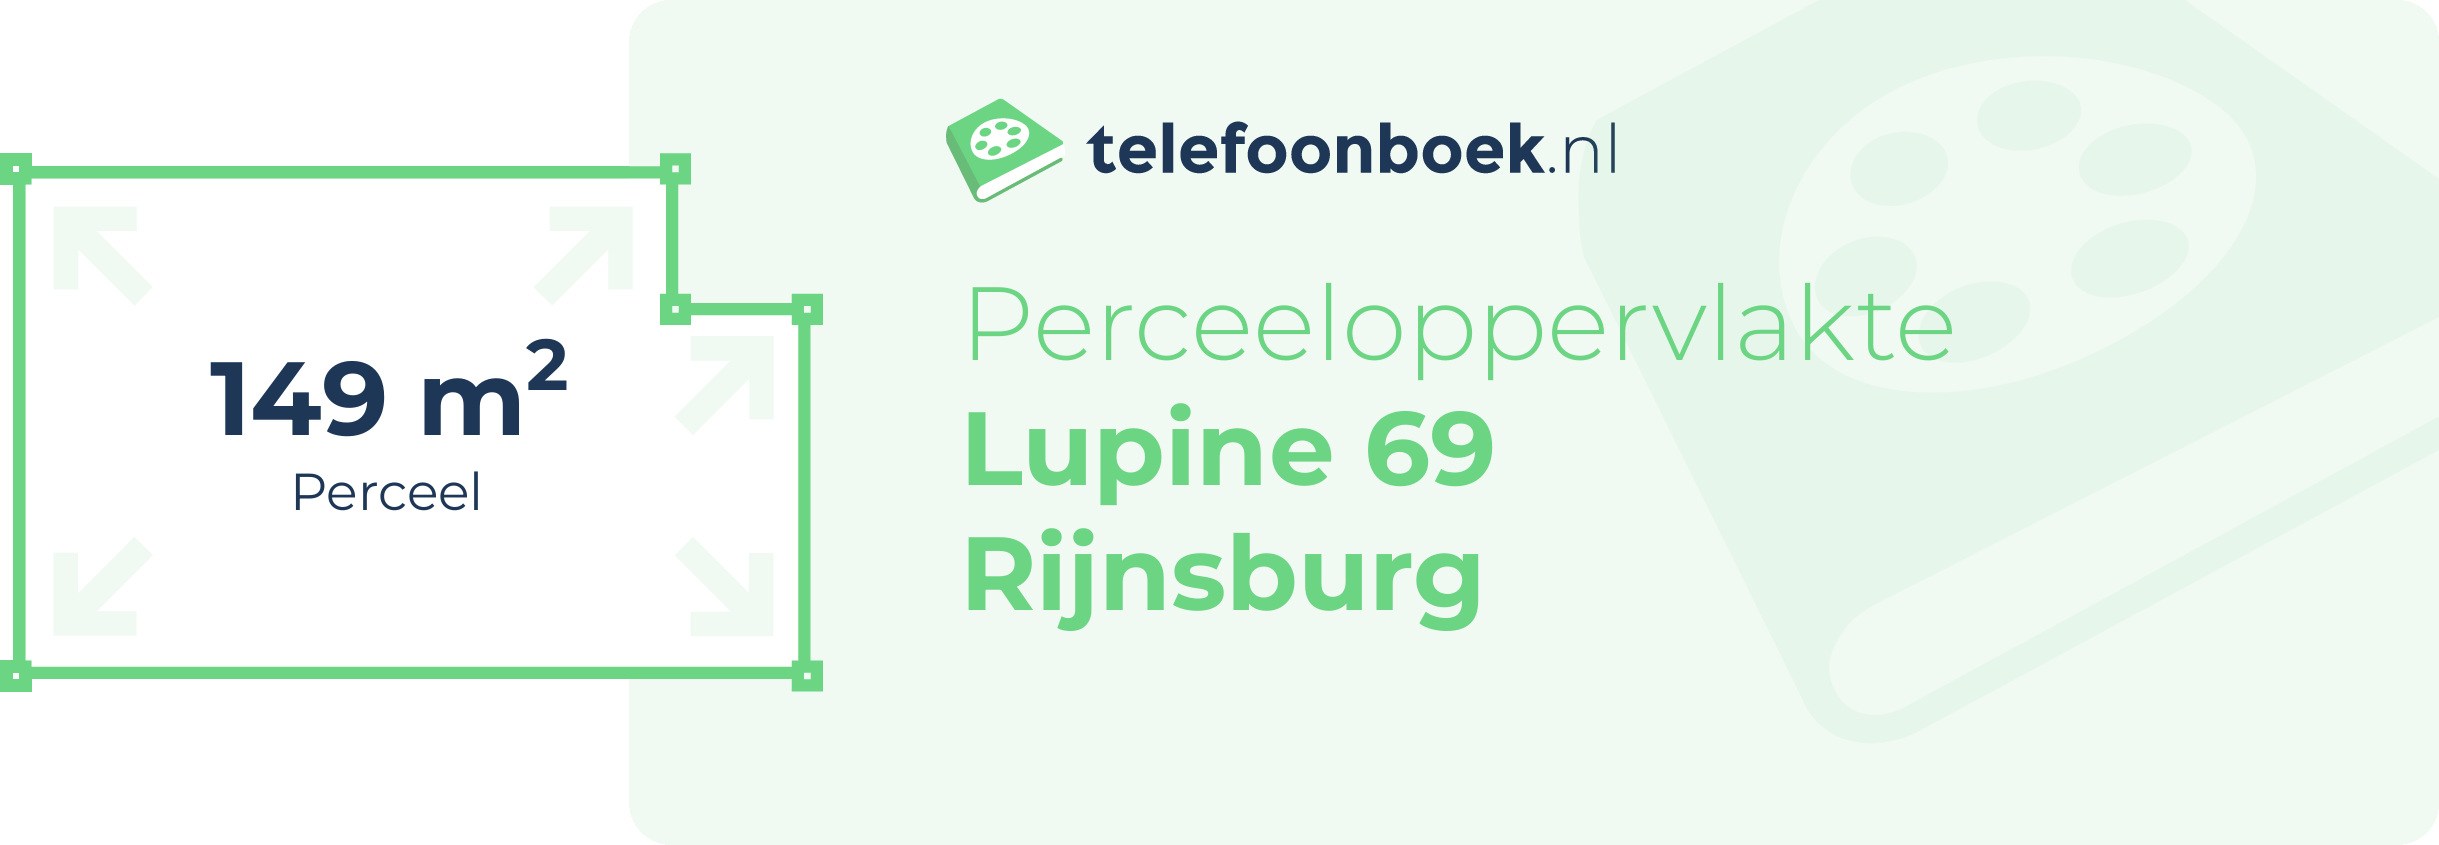 Perceeloppervlakte Lupine 69 Rijnsburg